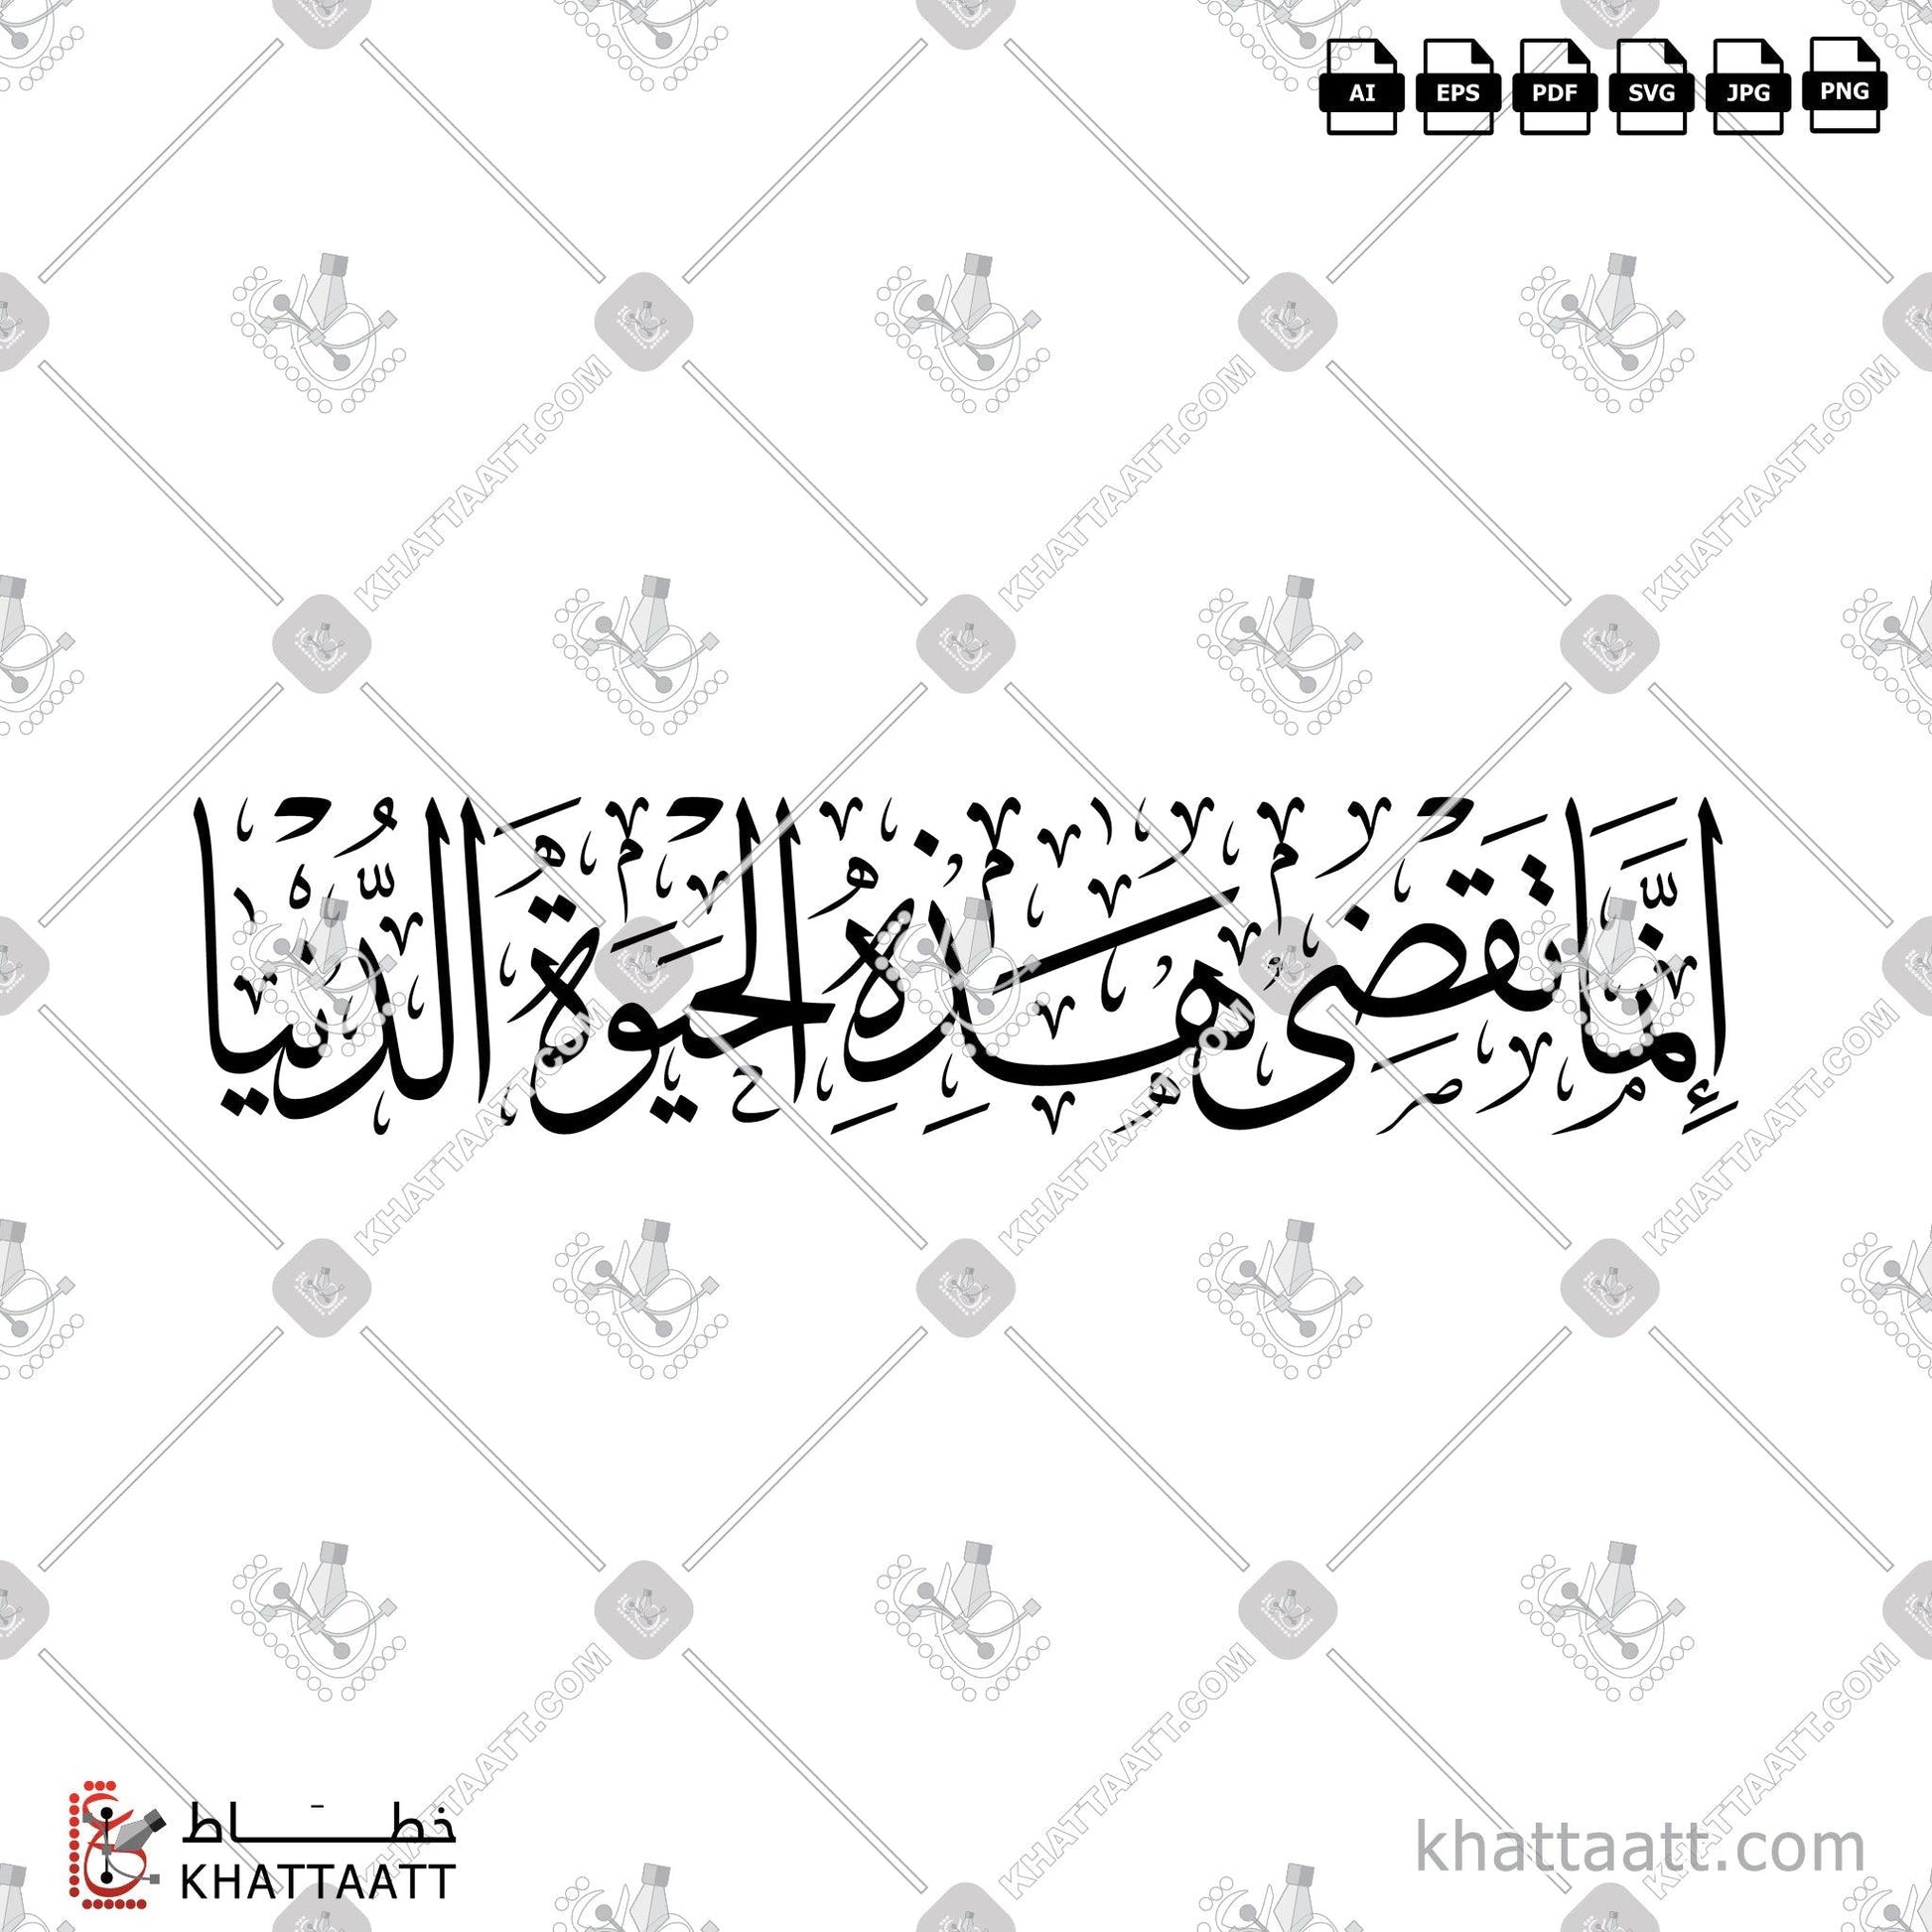 Download Arabic Calligraphy of انما تقضي هذه الحياة الدنيا in Thuluth - خط الثلث in vector and .png